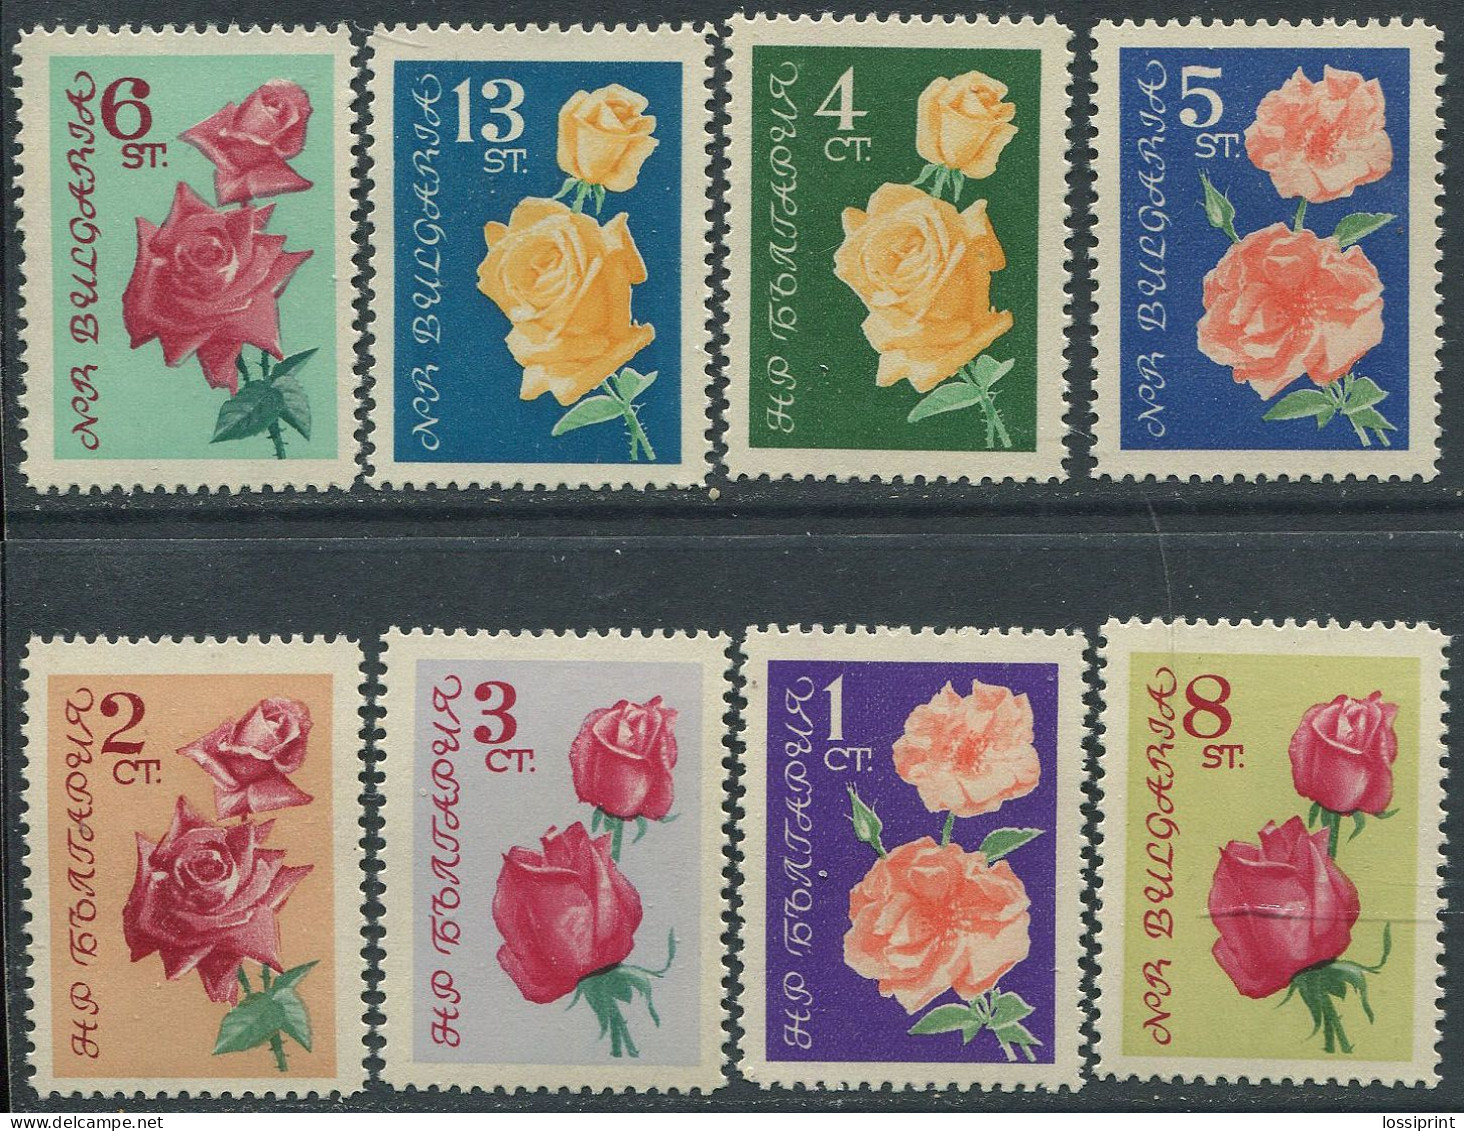 Bulgaria:Unused Stamps Serie Flowers, Roses, 1962, MNH - Rosen